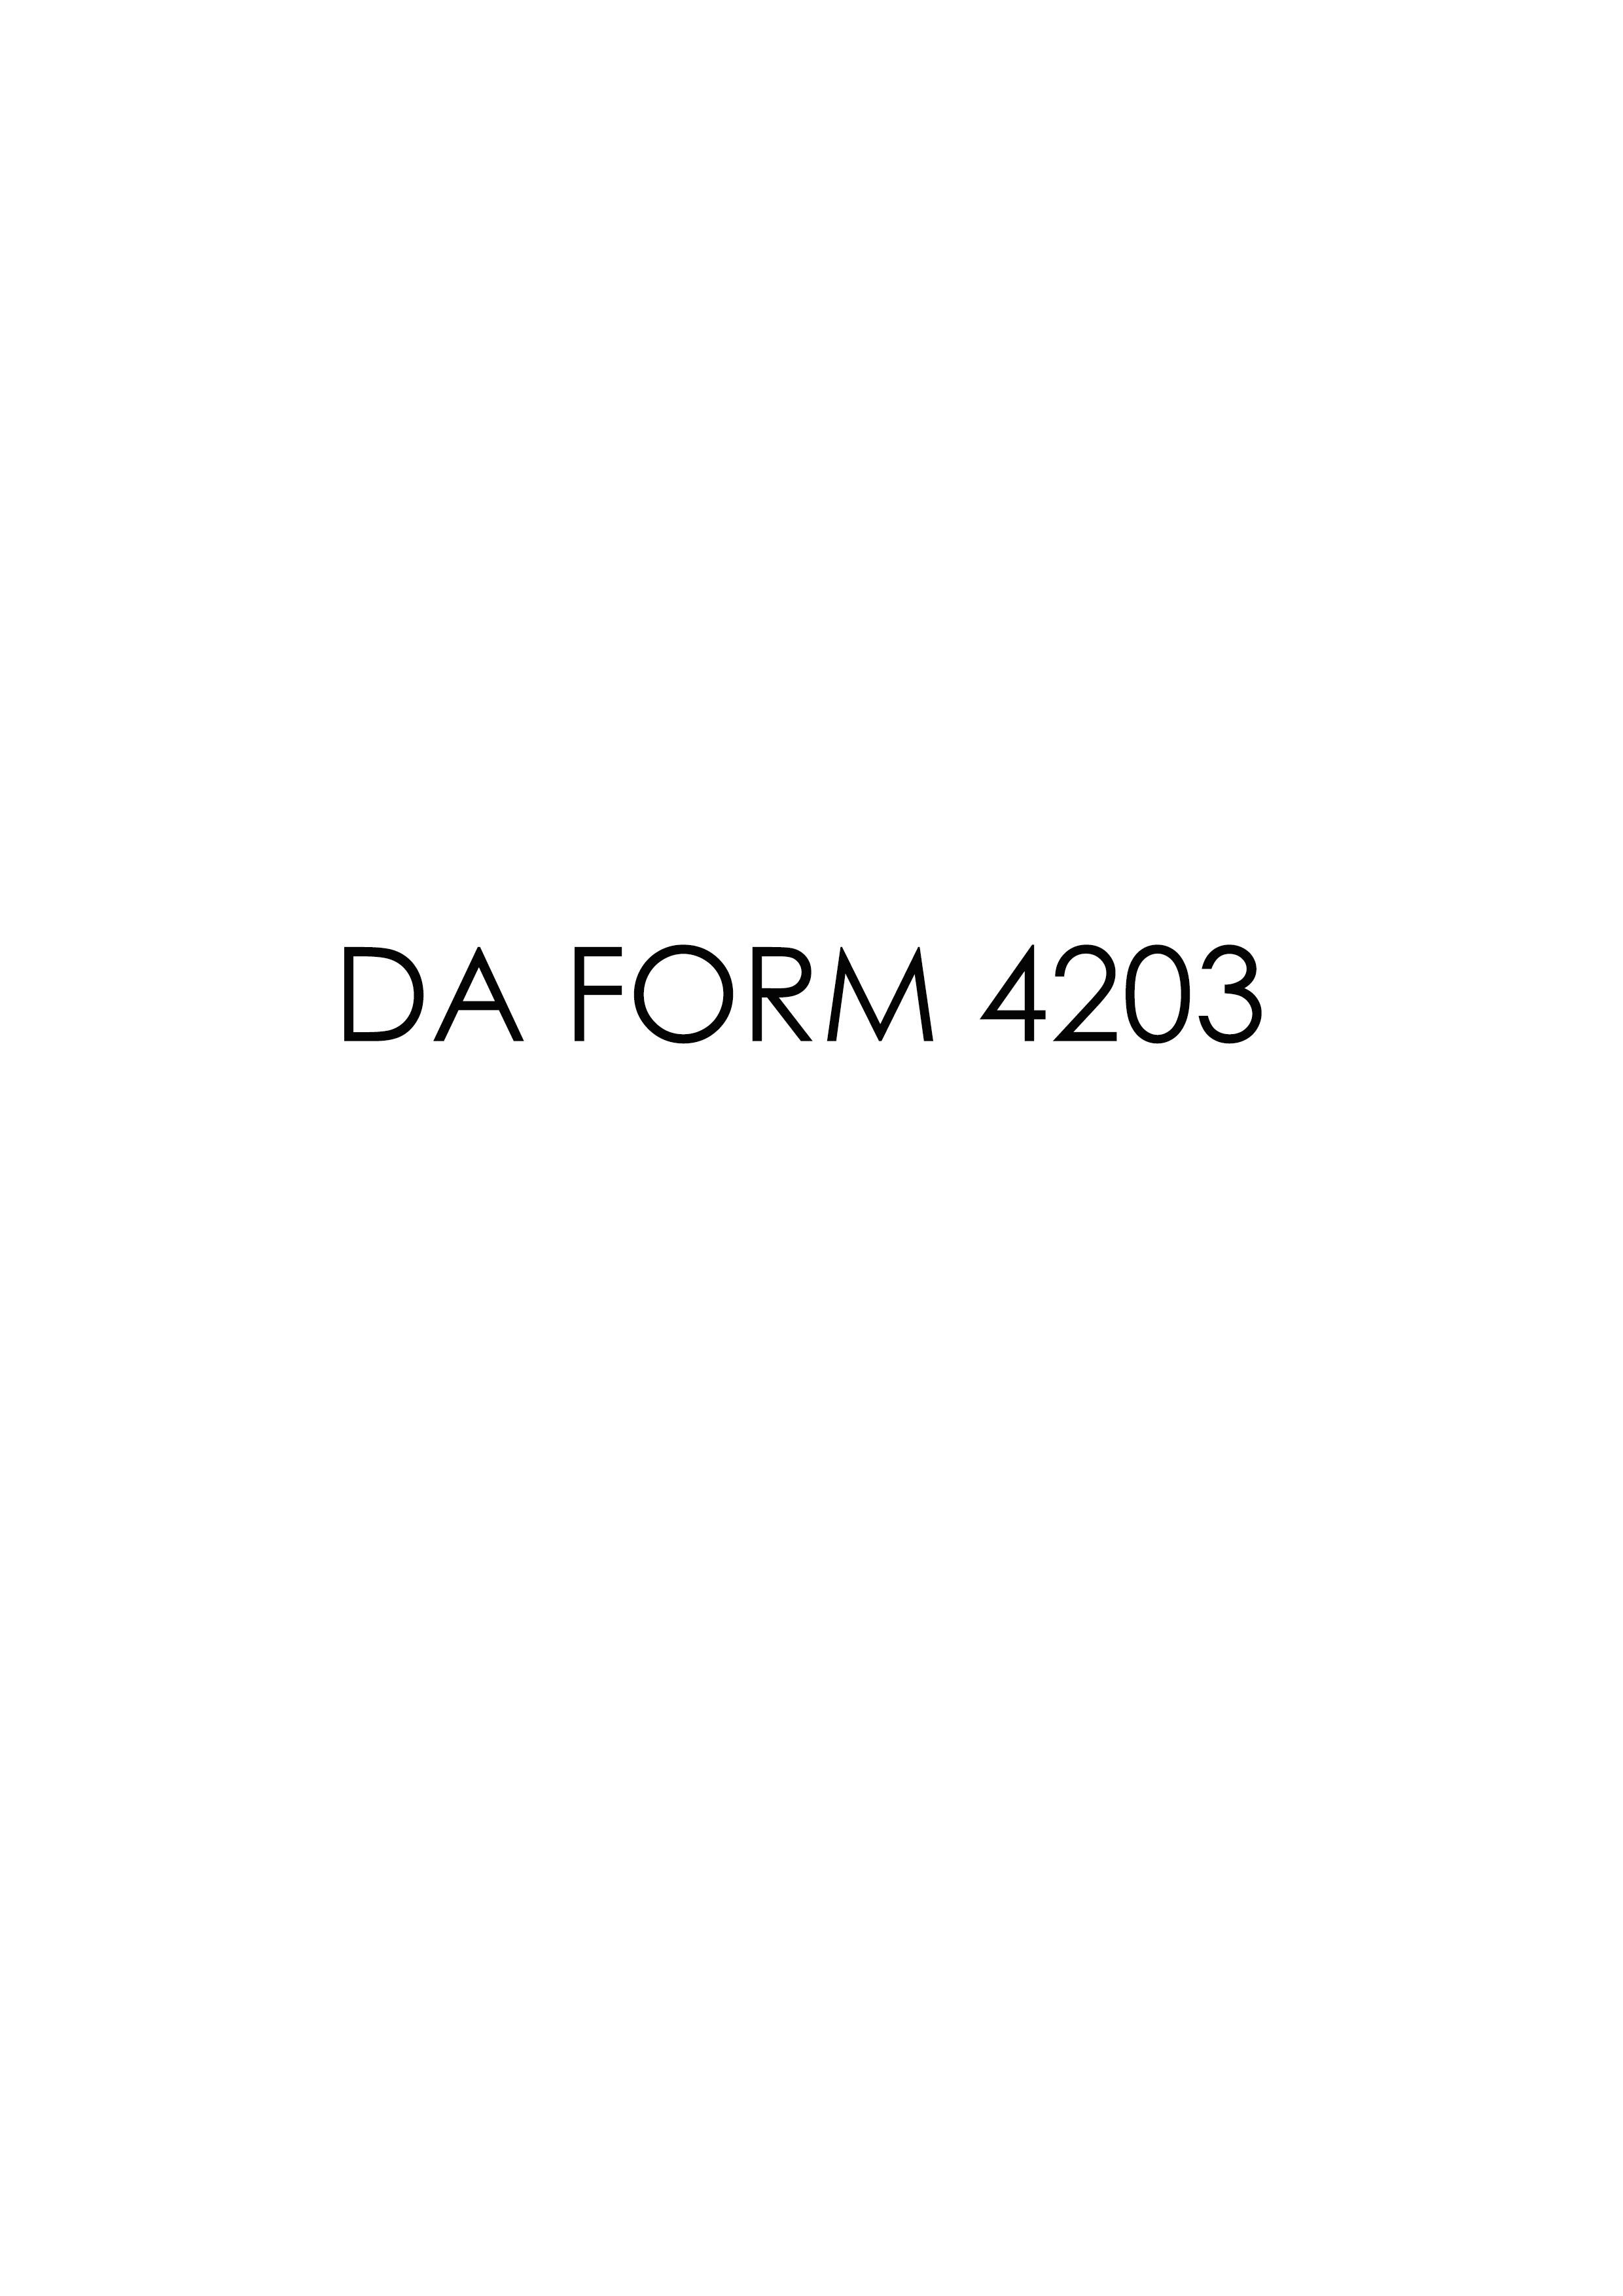 da Form 4203 fillable